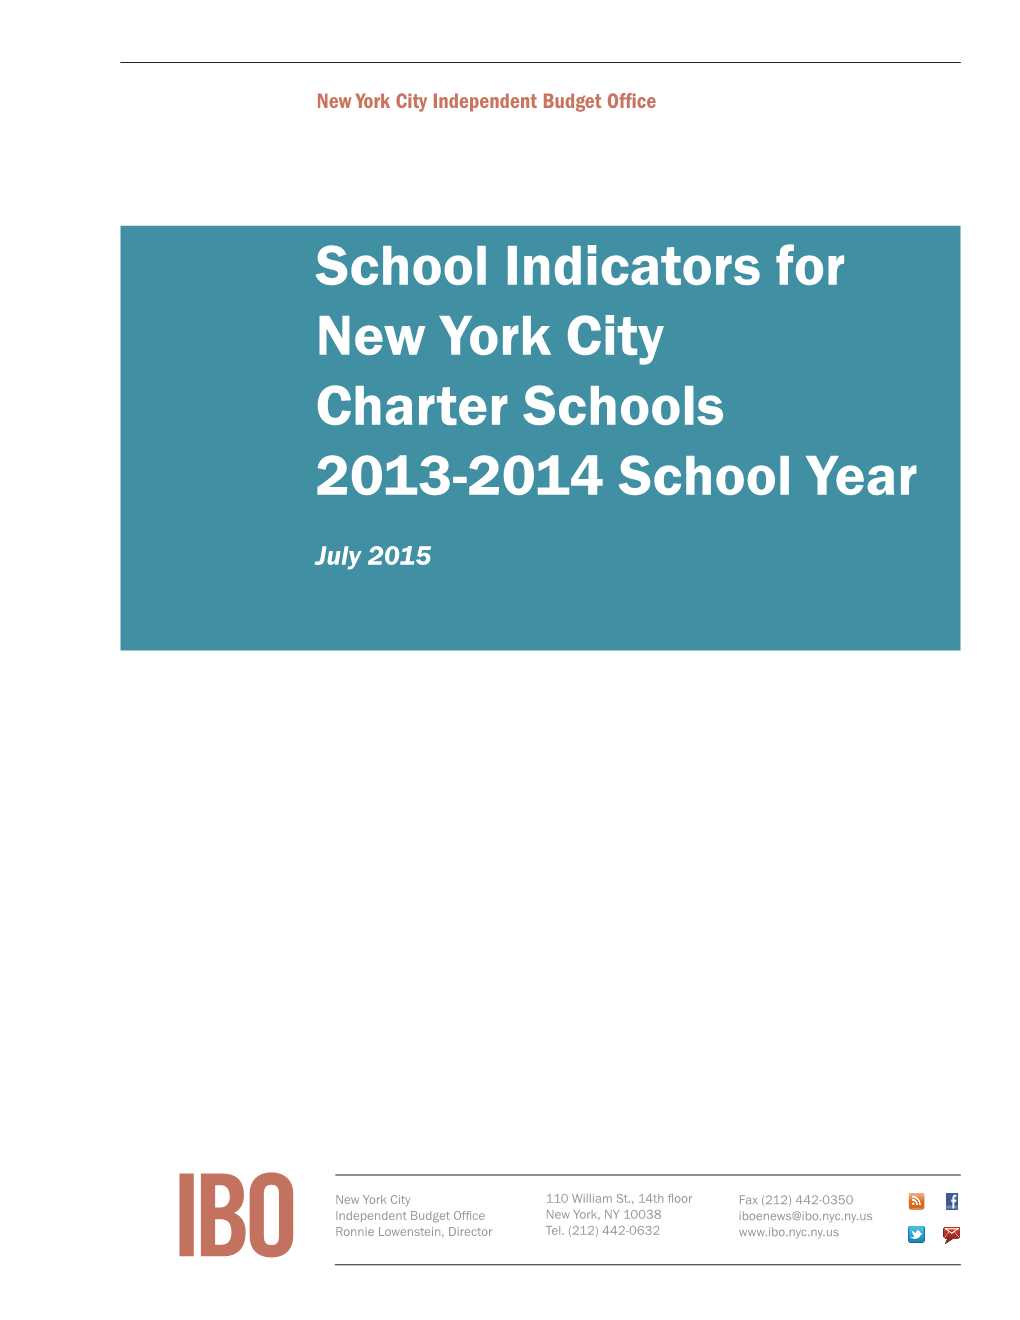 Indicators for New York City Charter Schools 2013-2014 School Year